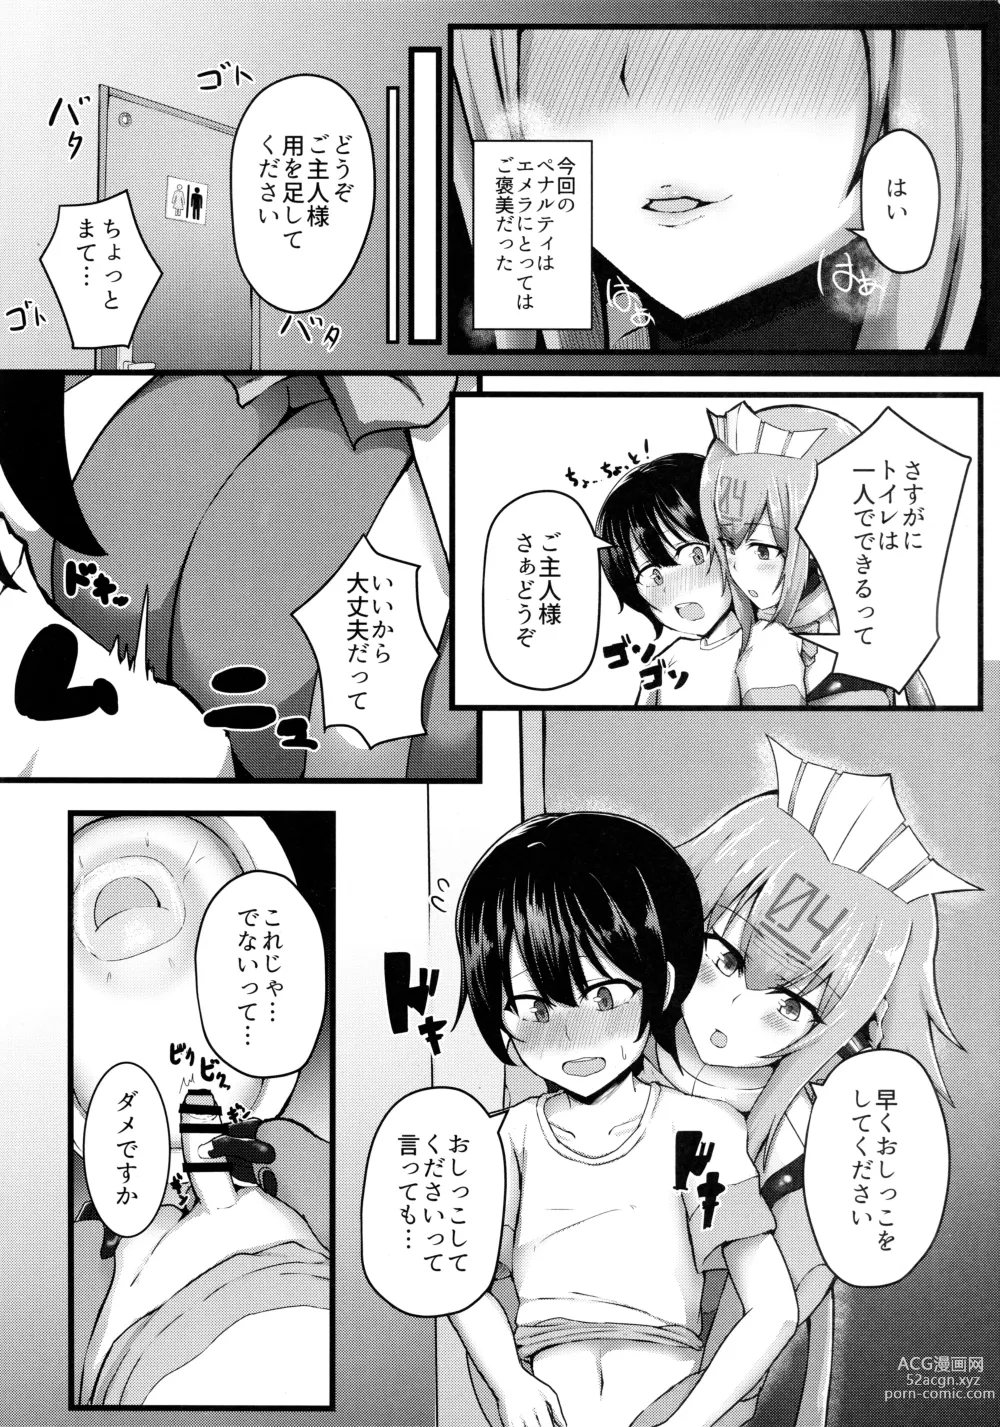 Page 4 of doujinshi Emera ni Omakase wo